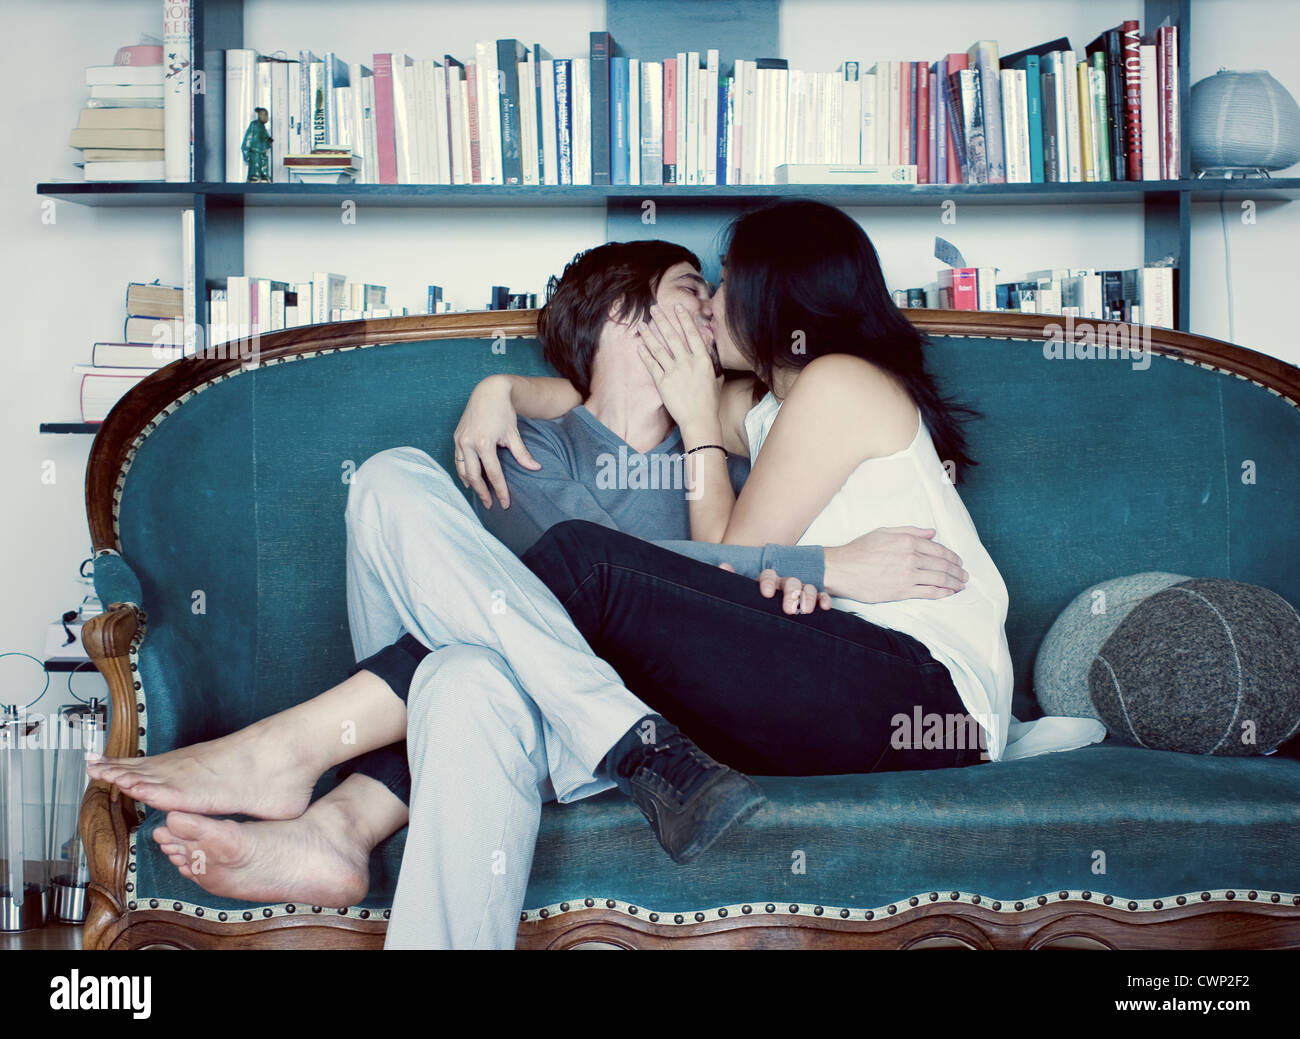 Couple kissing on sofa Stock Photo - Alamy